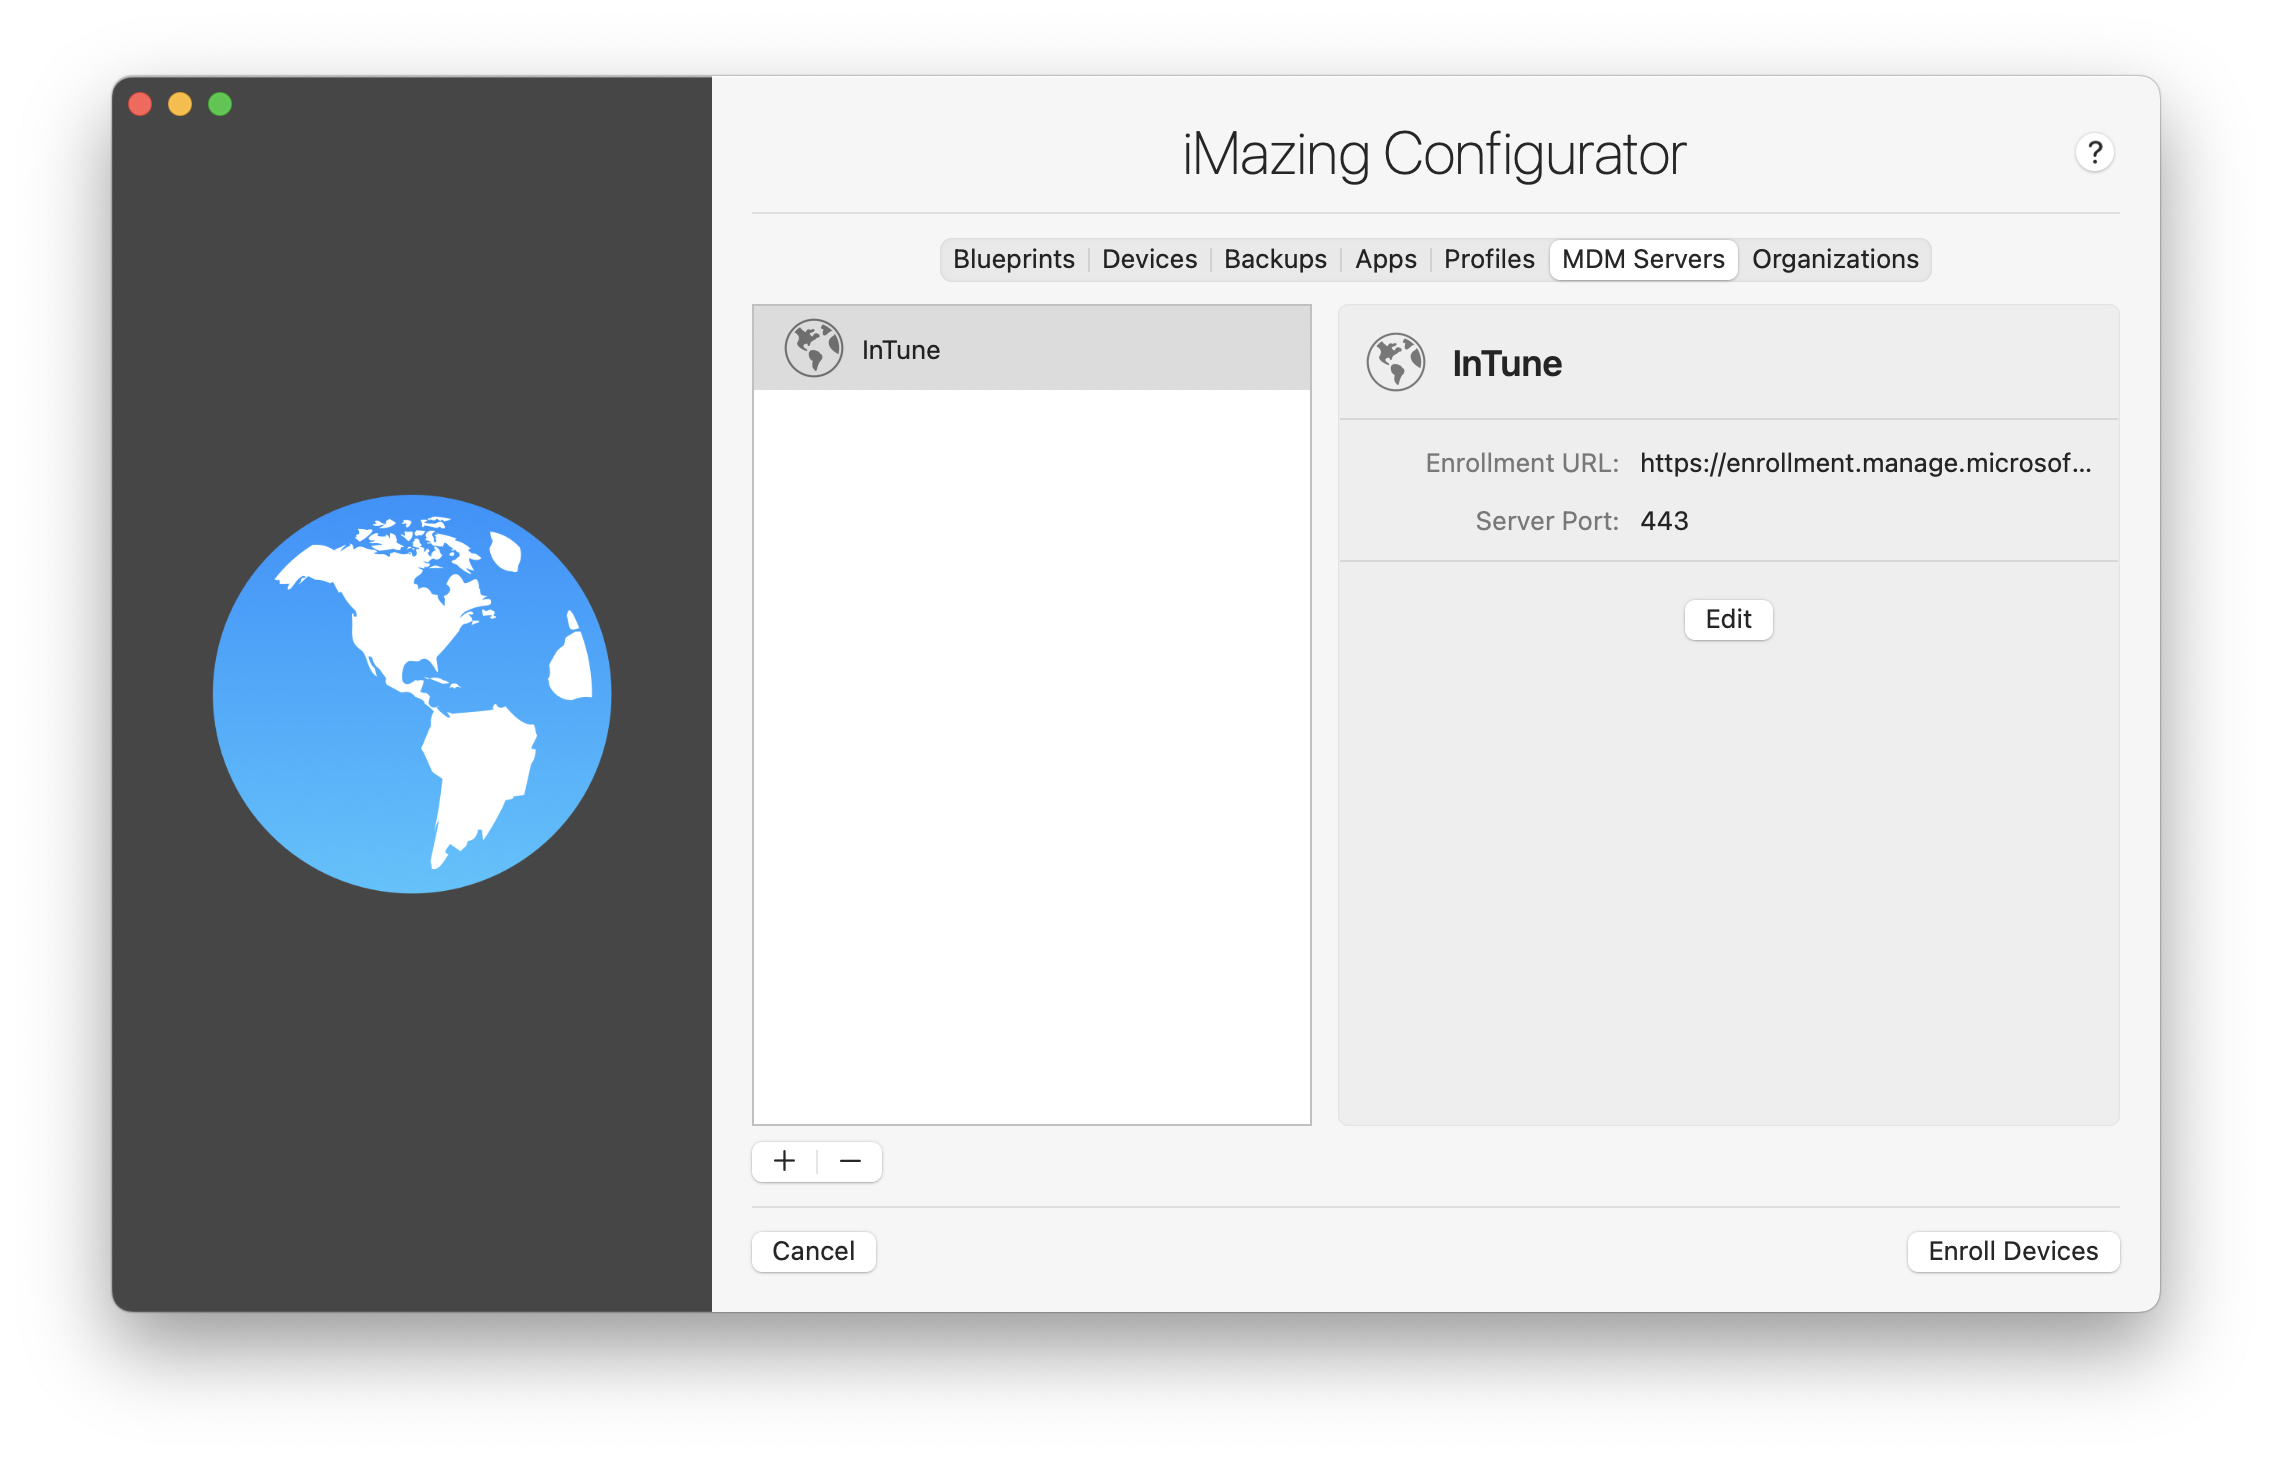 iMazing Configurator Library, MDM Servers Section